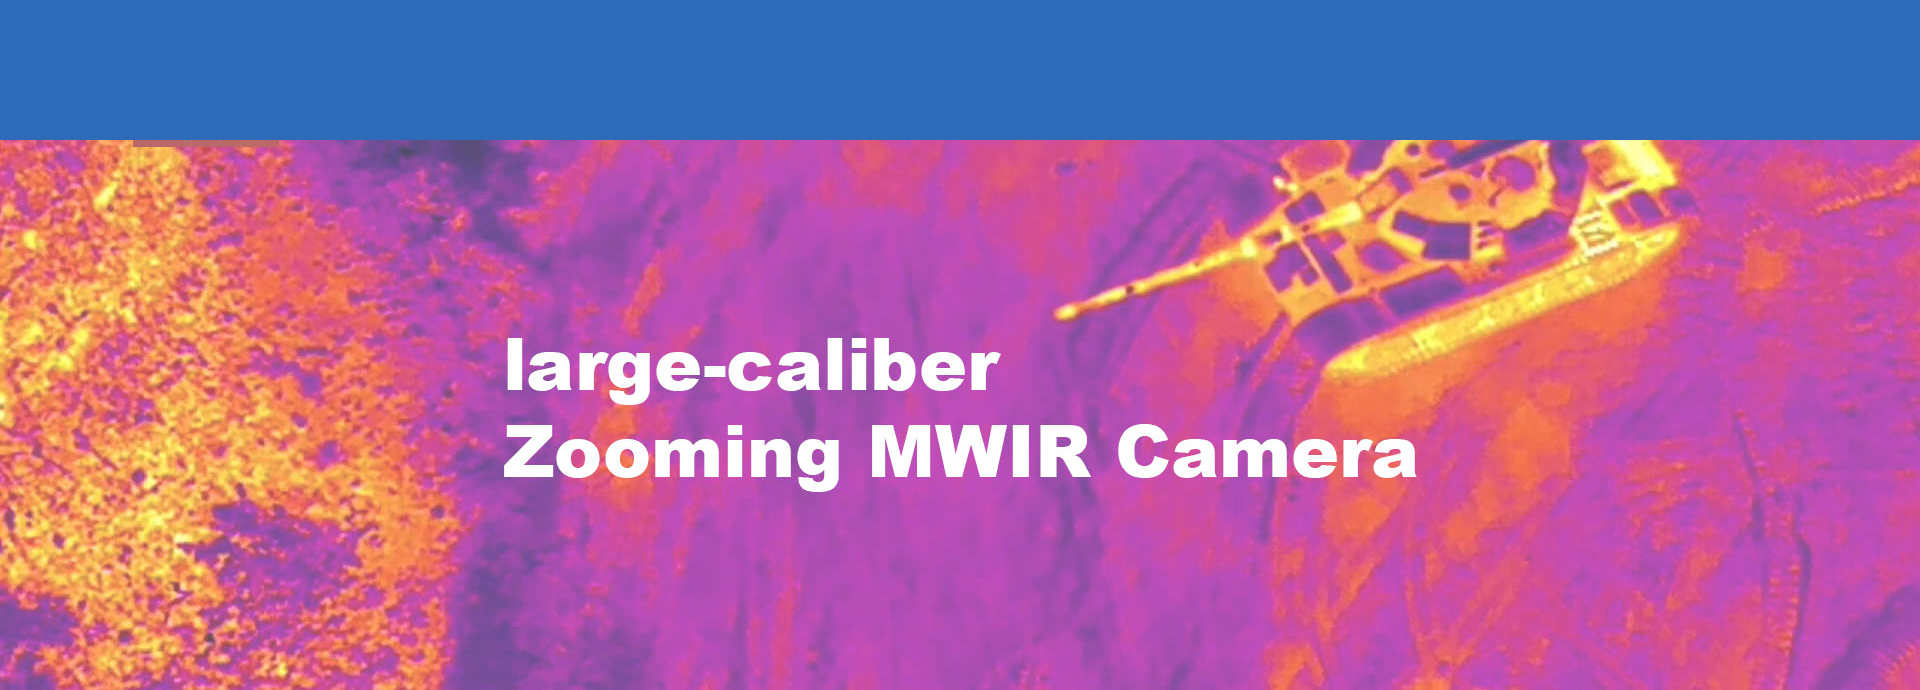 large caliber zooming MWIR Camera